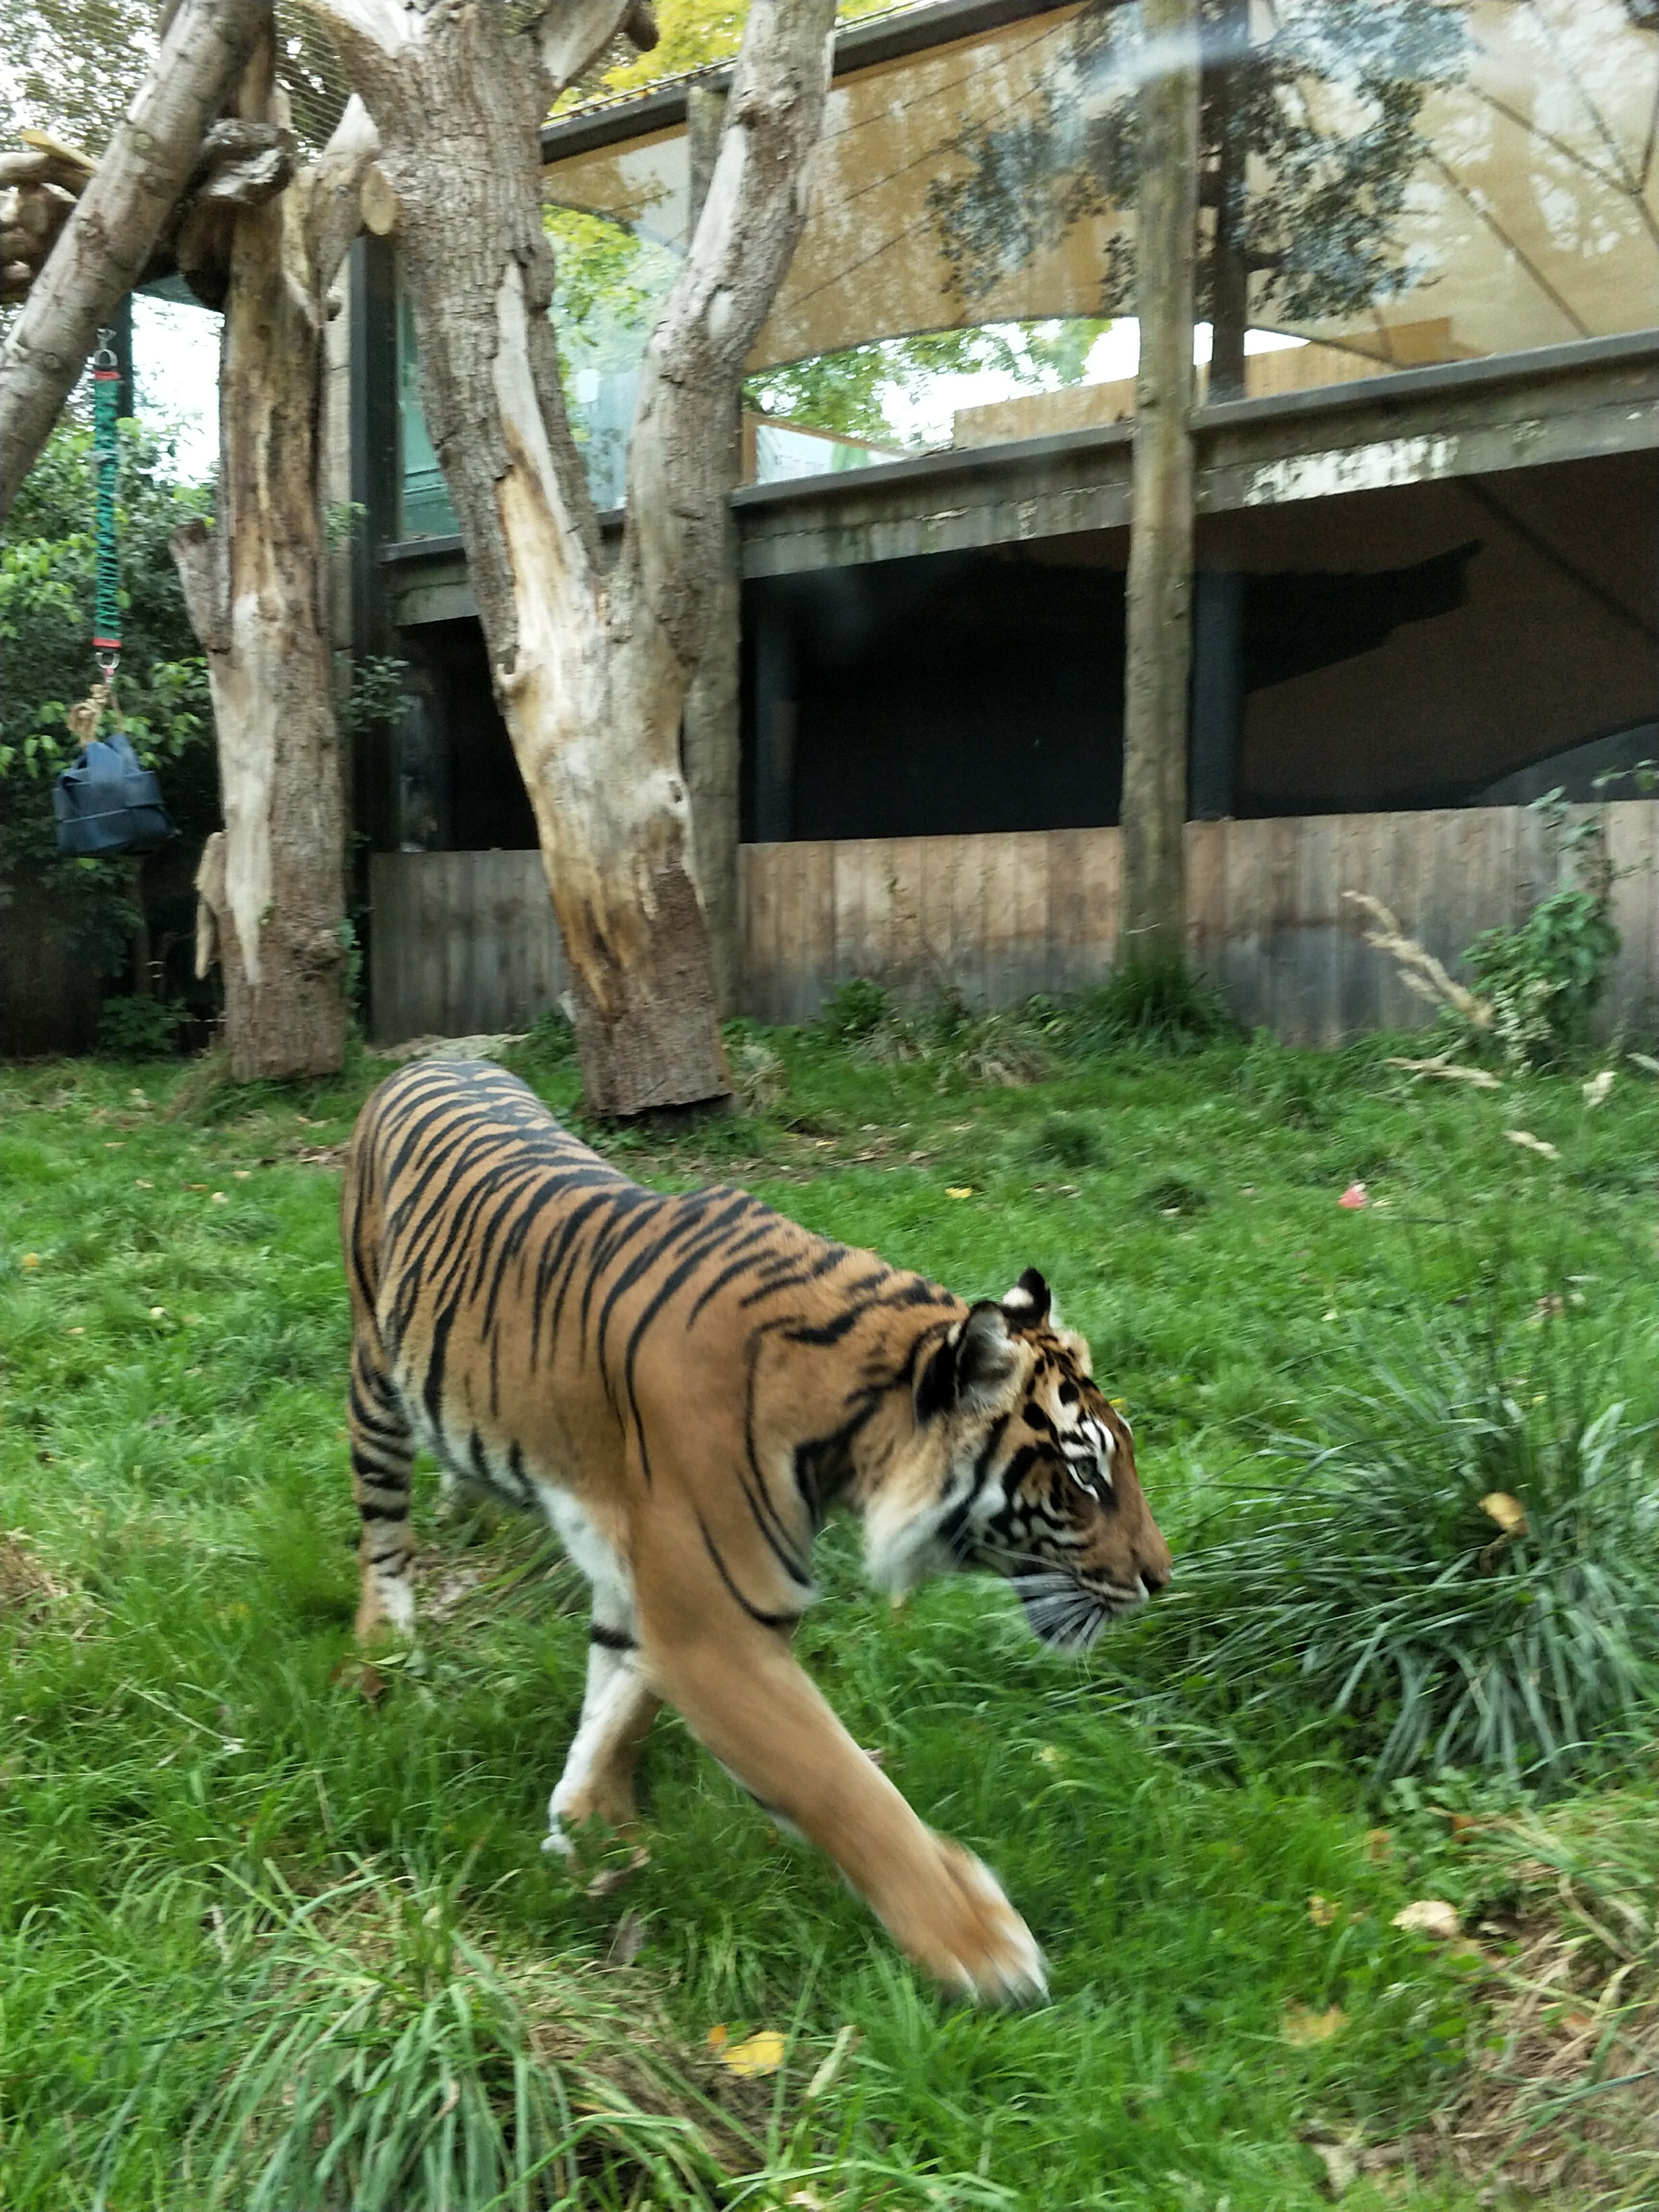 A Tiger at the Zoo